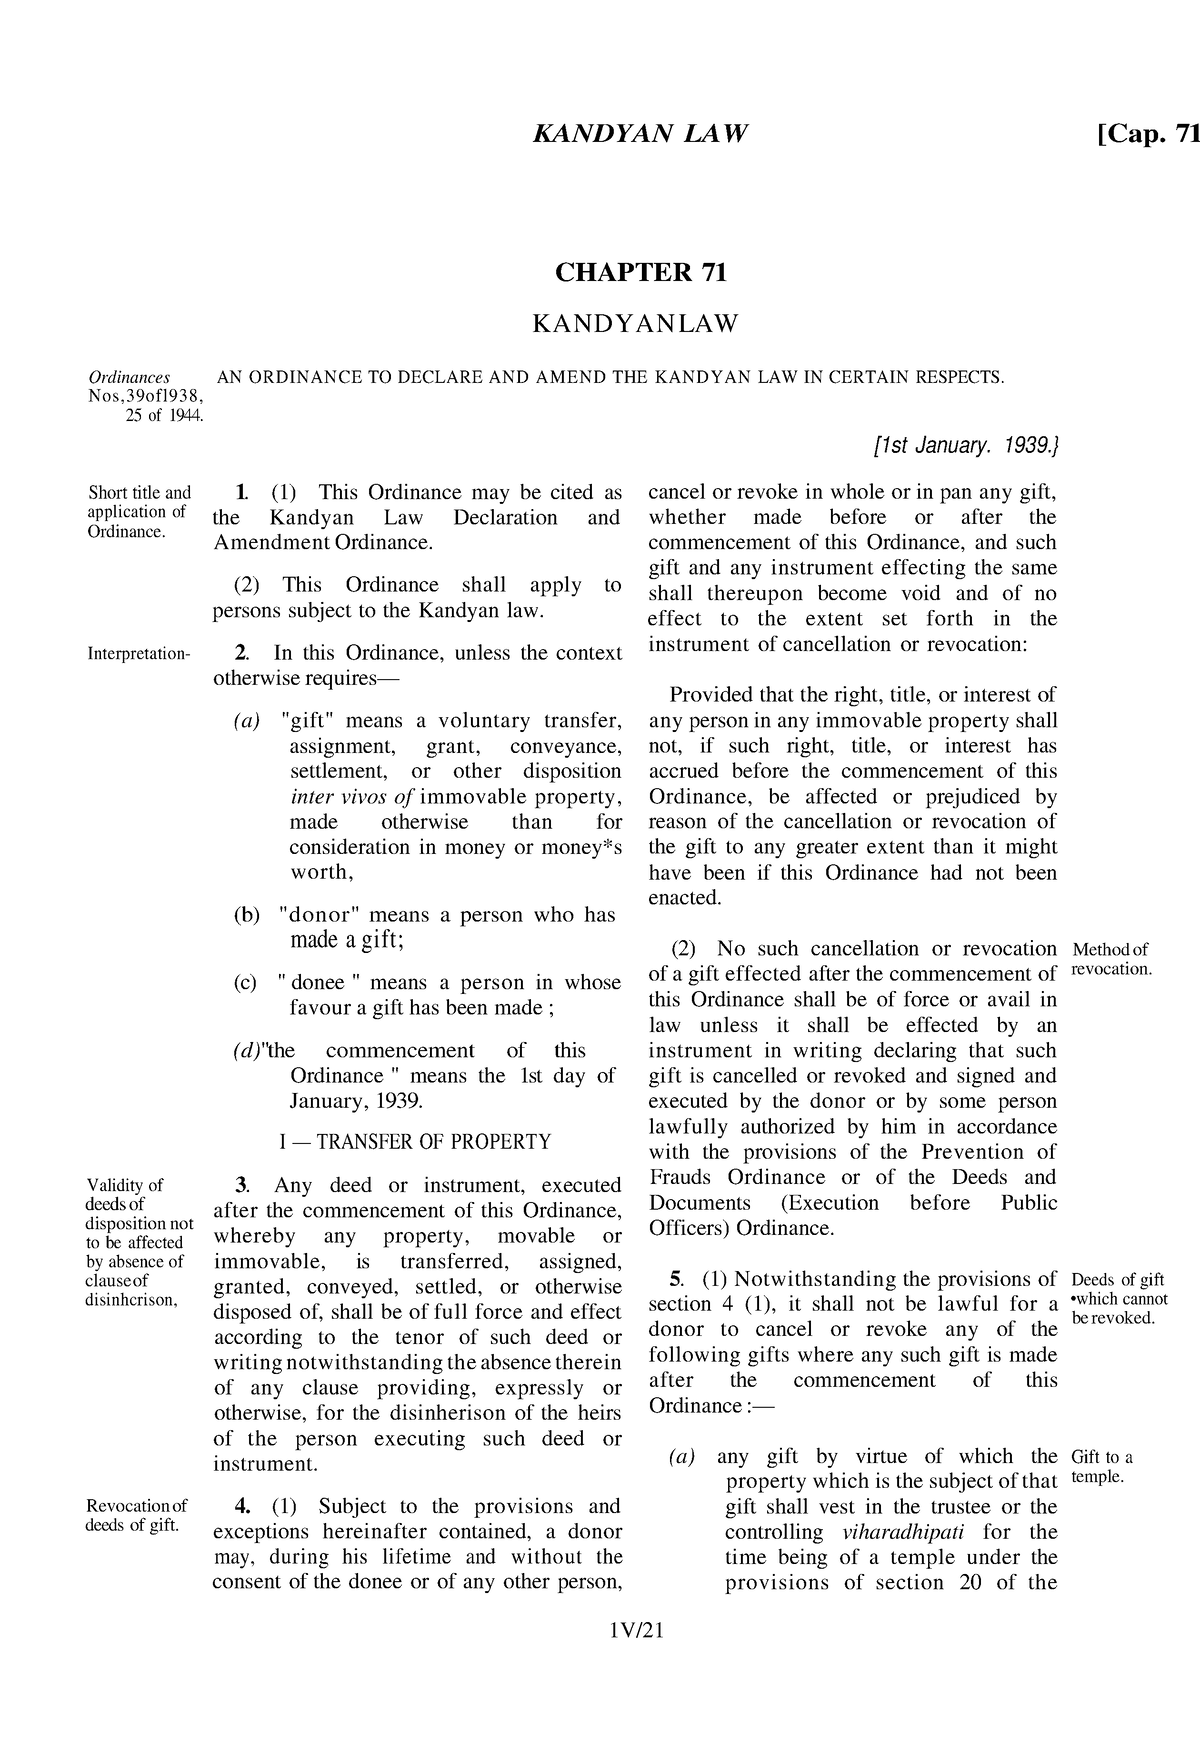 Kandyan Law Declaration and Amendment Ordinance - KANDYAN LAW [Cap. 71 ...